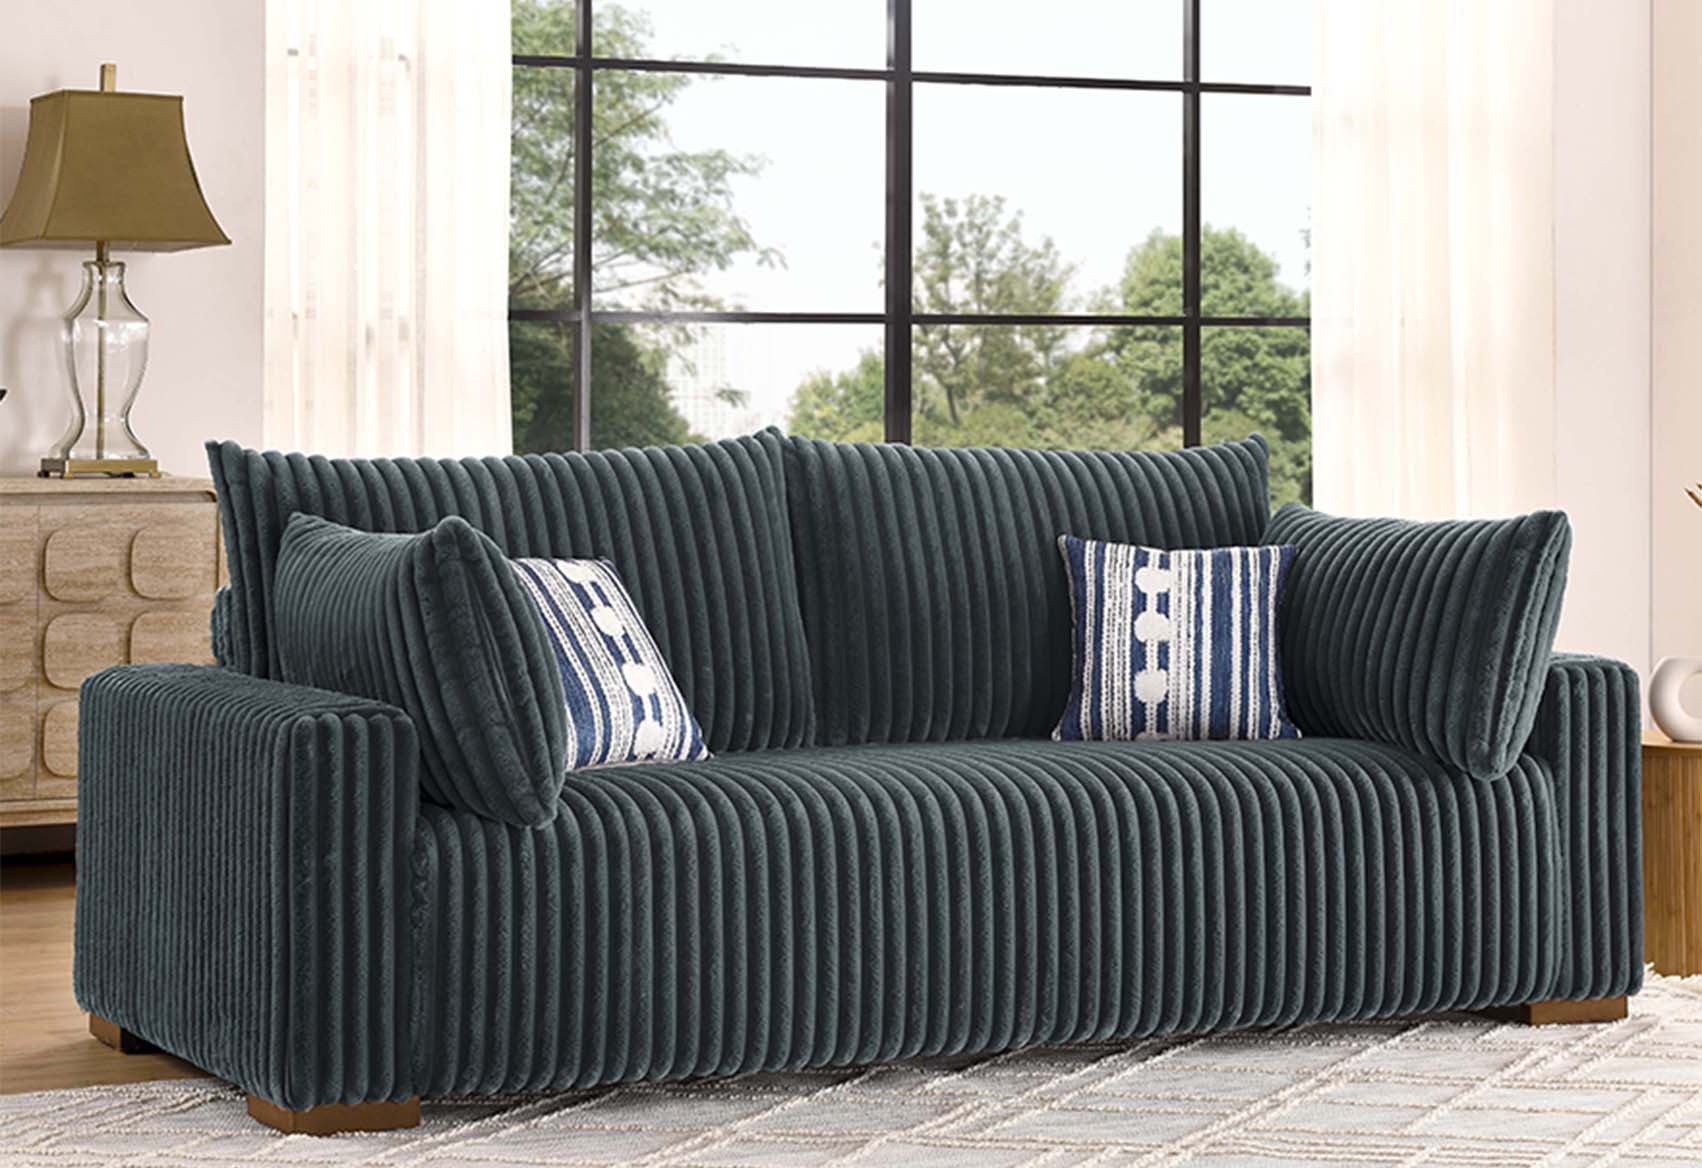 Discover the New Rabbit Plush Sofa